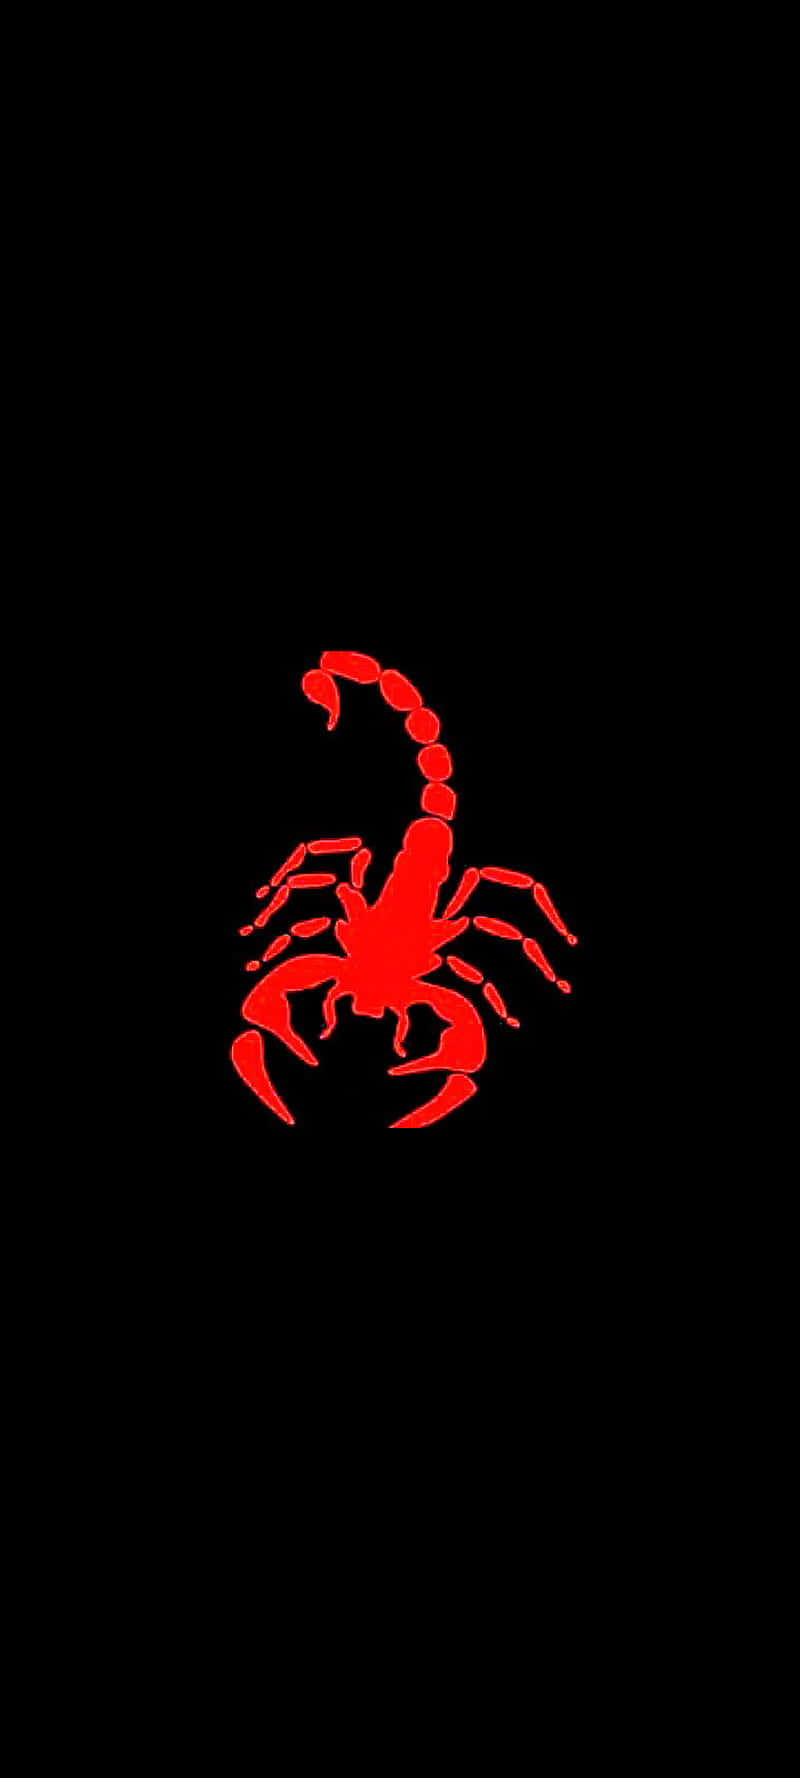 Red Scorpion on black background Wallpaper